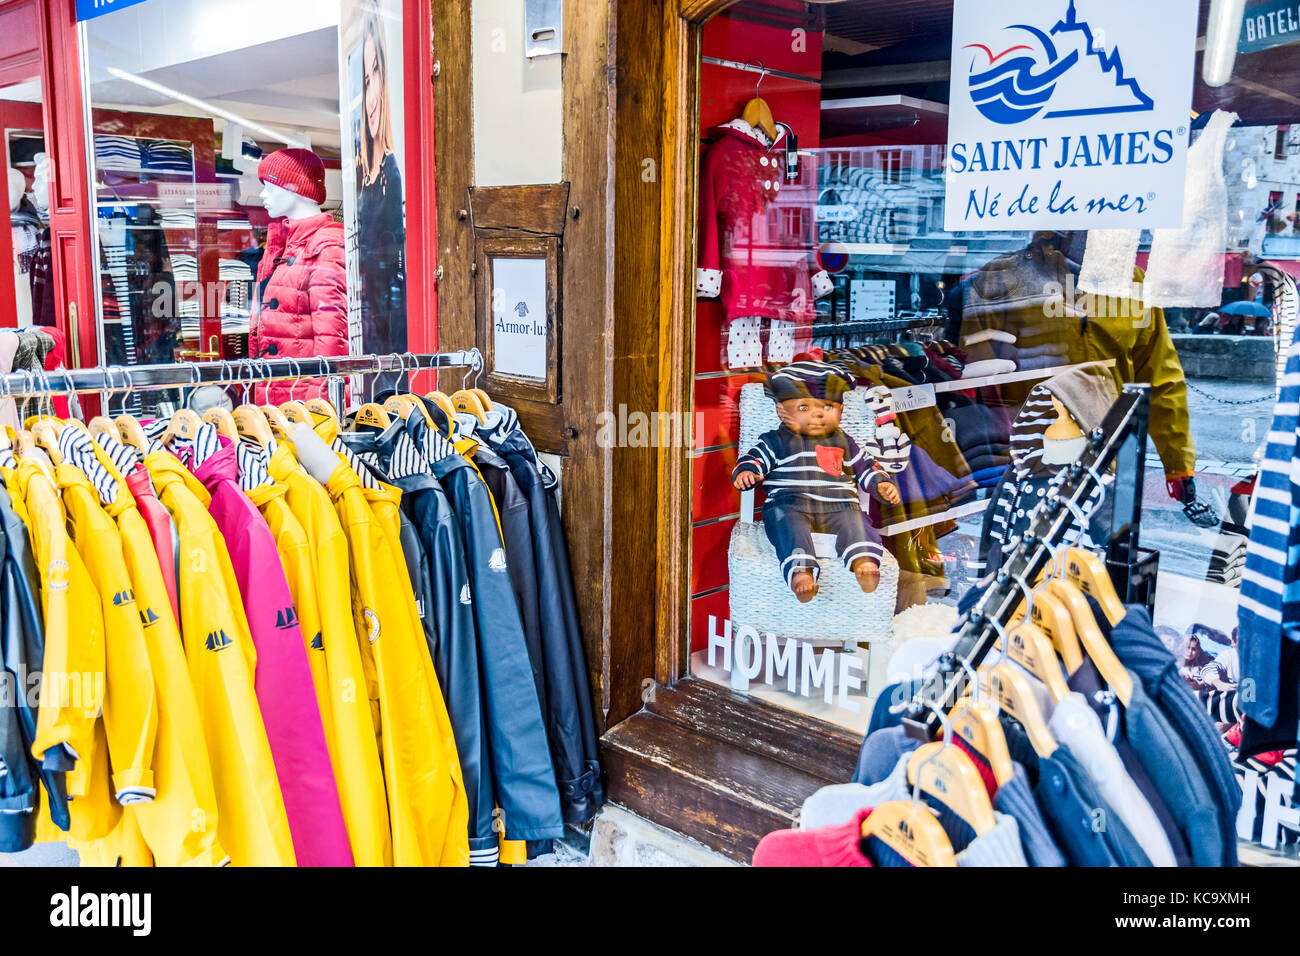 Honfleur (Francia): Tienda con trajes típicos para el mar; Geschäft mit typischen Produkten für Urlaub am Meer Foto de stock